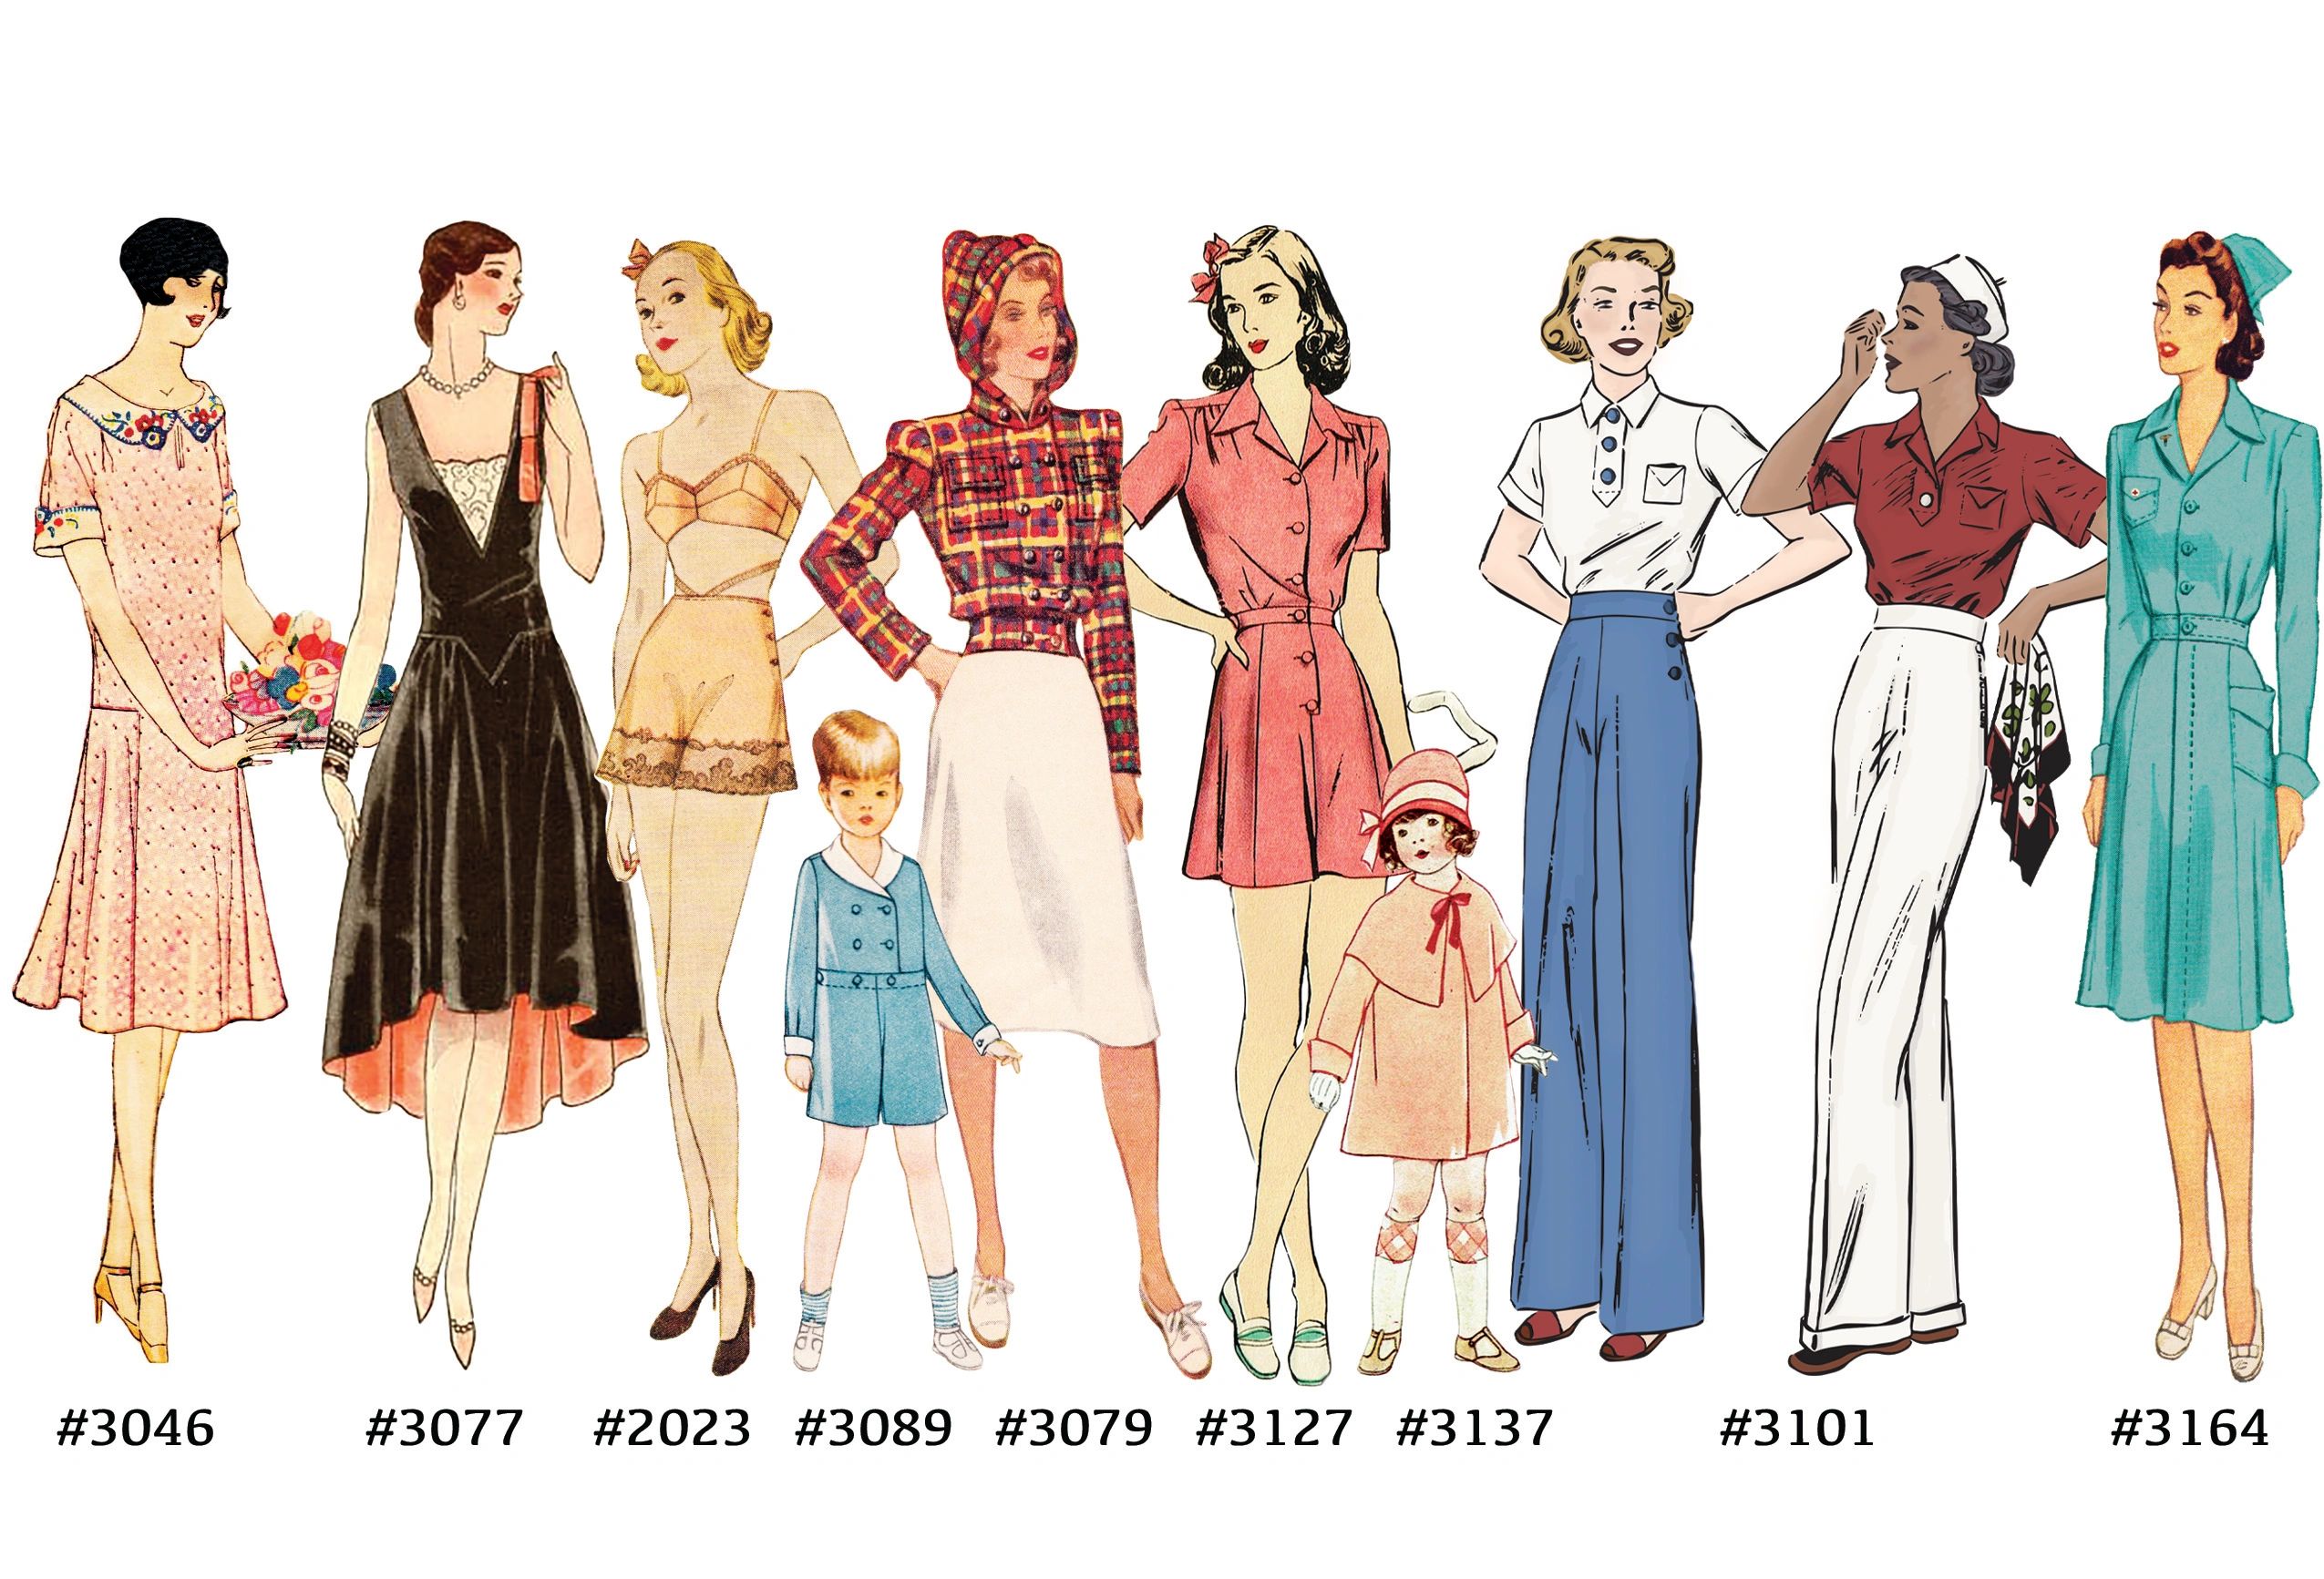 Sewing Patterns - Mrs. Depew Vintage